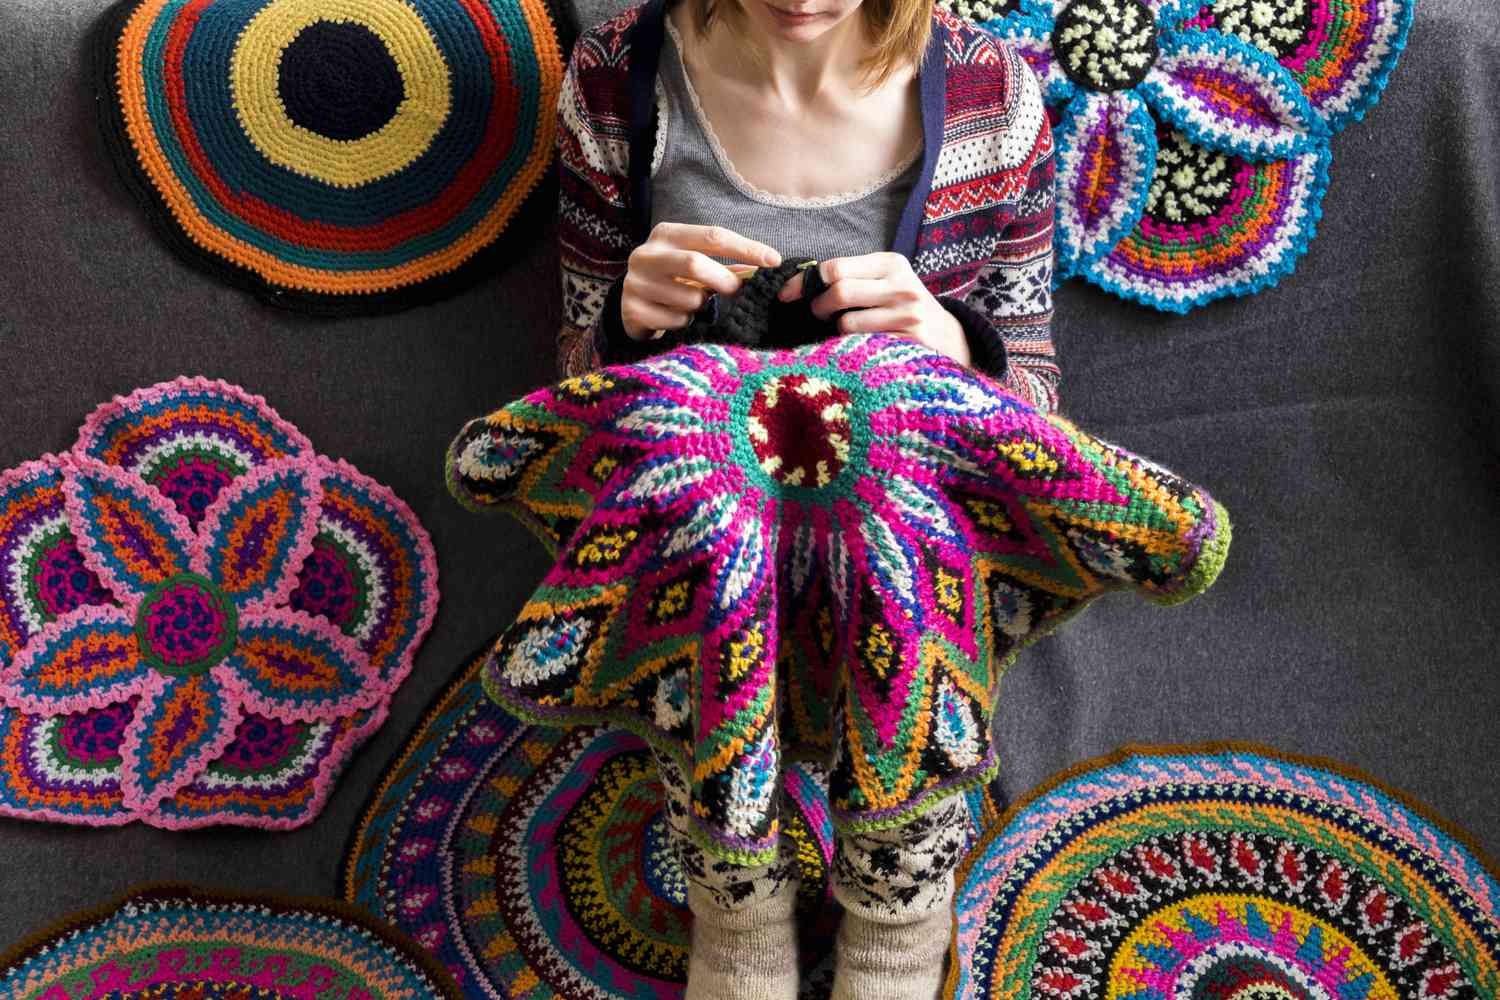 Woman crocheting